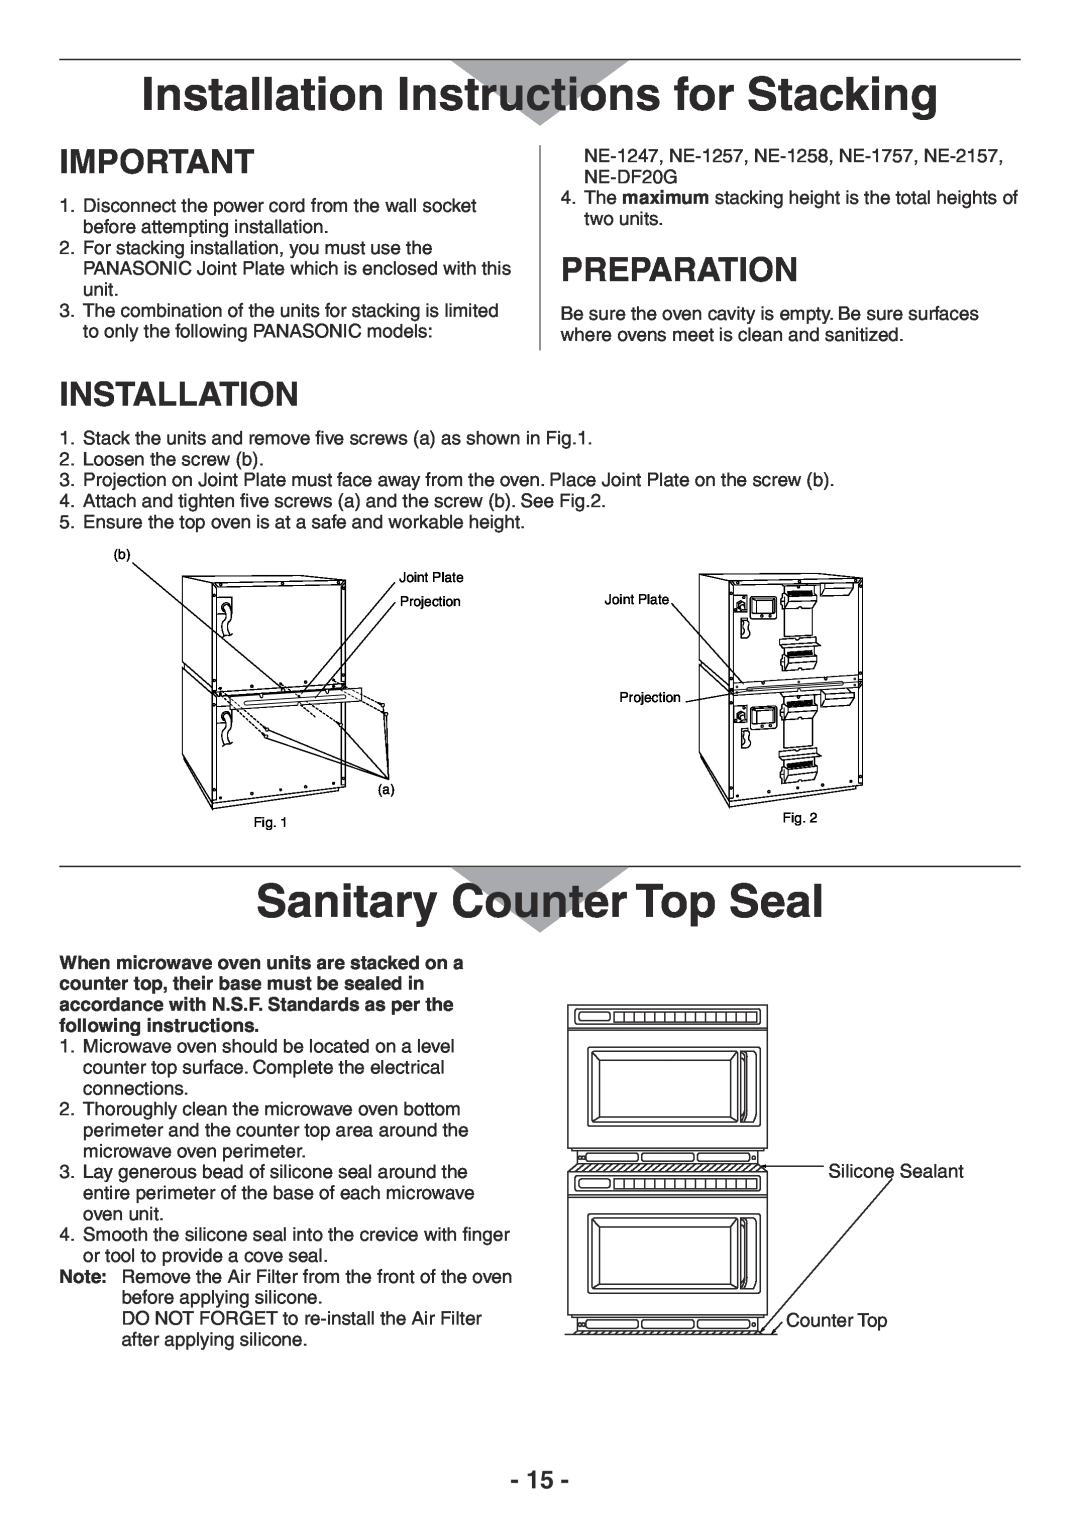 Panasonic NE-1258R, NE-2157R Installation Instructions for Stacking, Sanitary Counter Top Seal, preparation, installation 